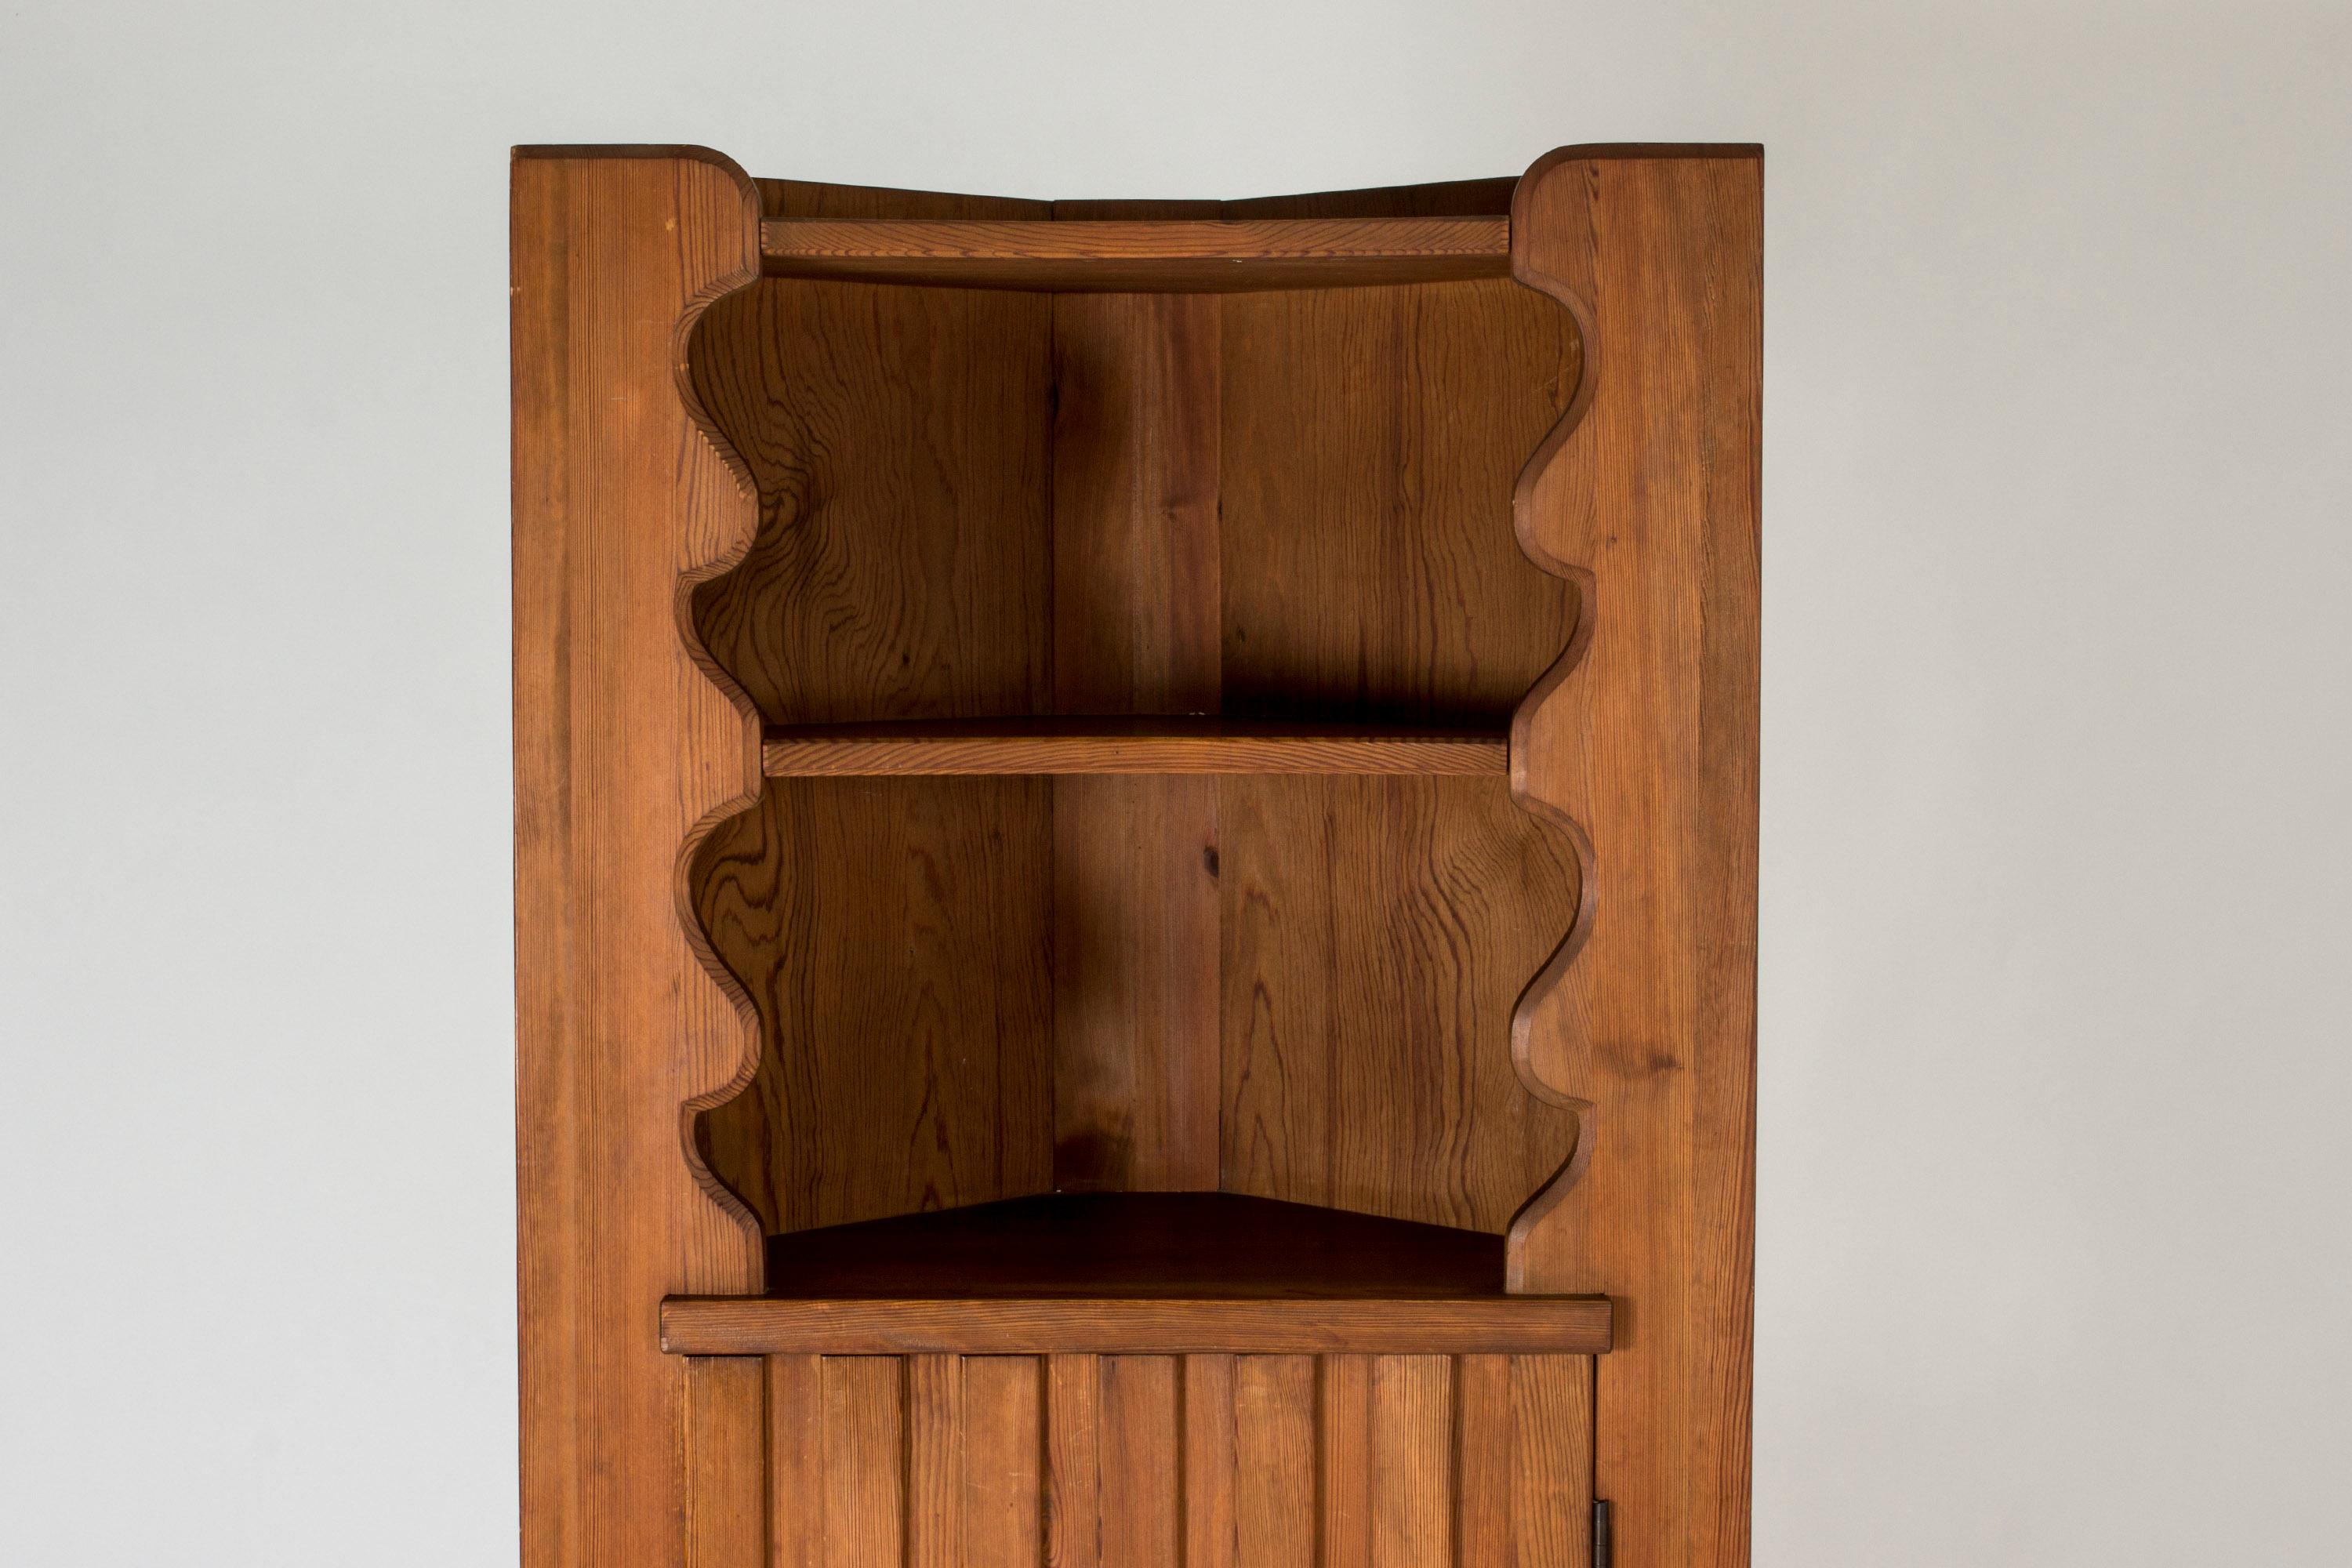 Scandinavian Modern Pine Corner Cabinet, “Utö”, by Axel Einar Hjorth